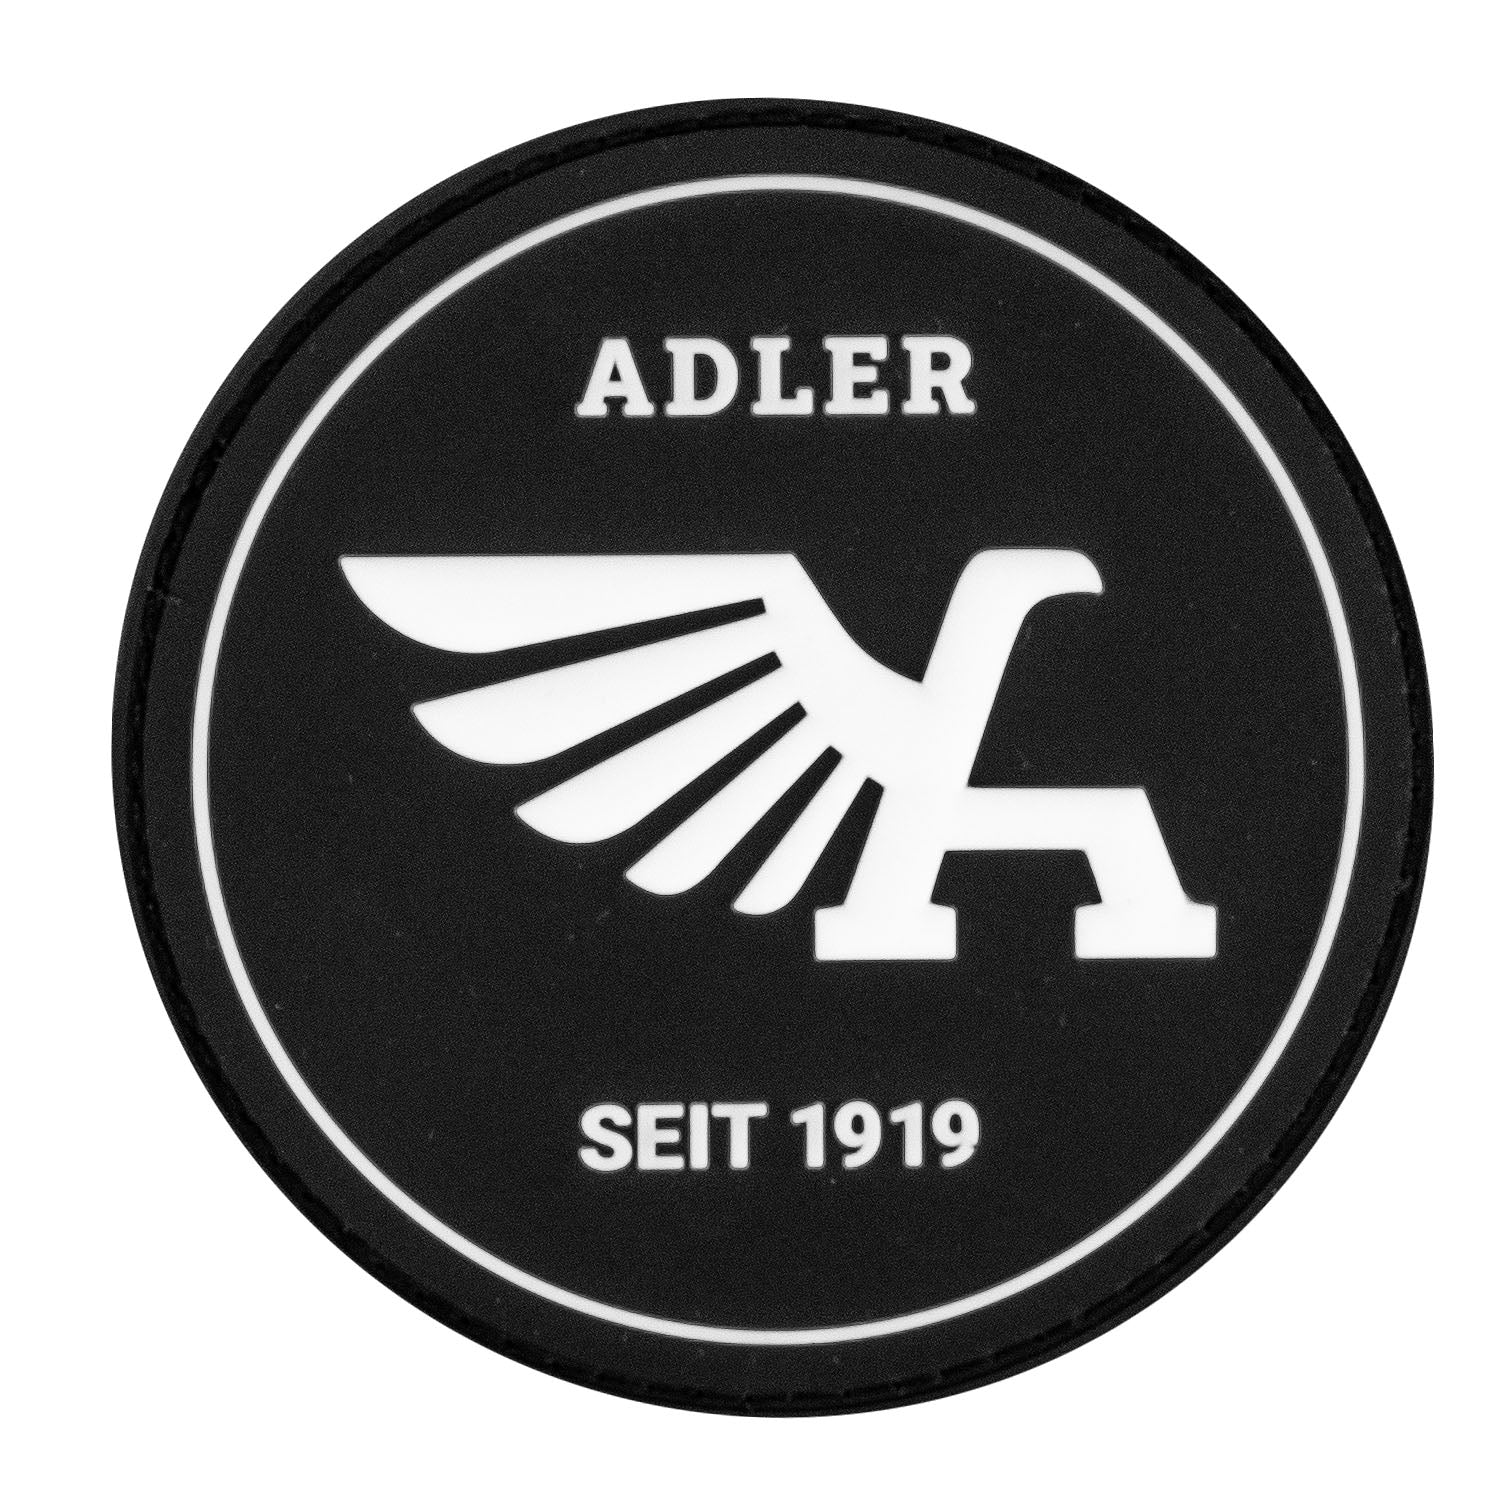 Adler 'A' Patch